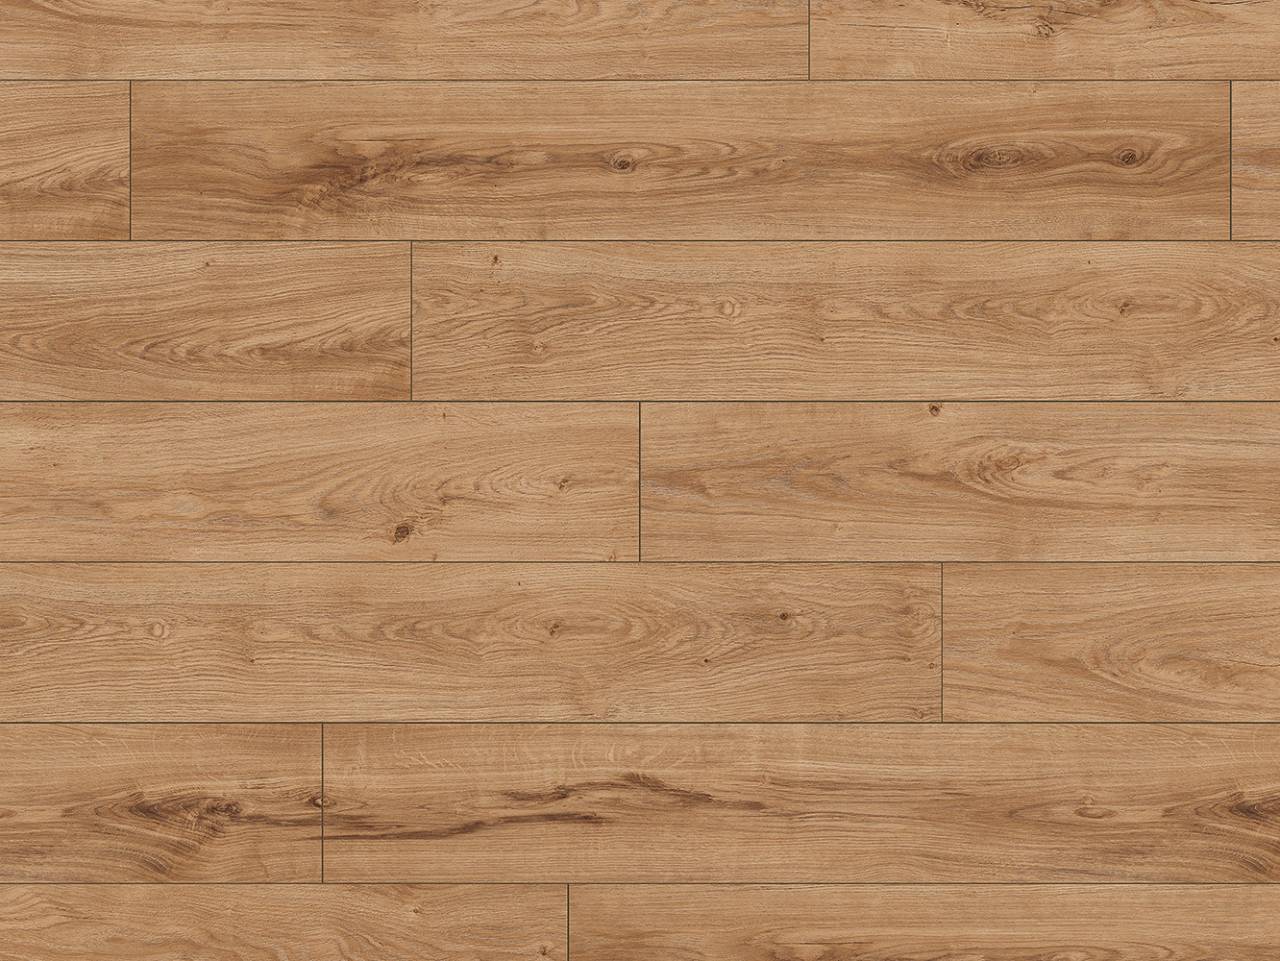 Close-up of 'K468 Gondola Oak' flooring highlighting detailed oak-like grain patterns and deep brown hues.